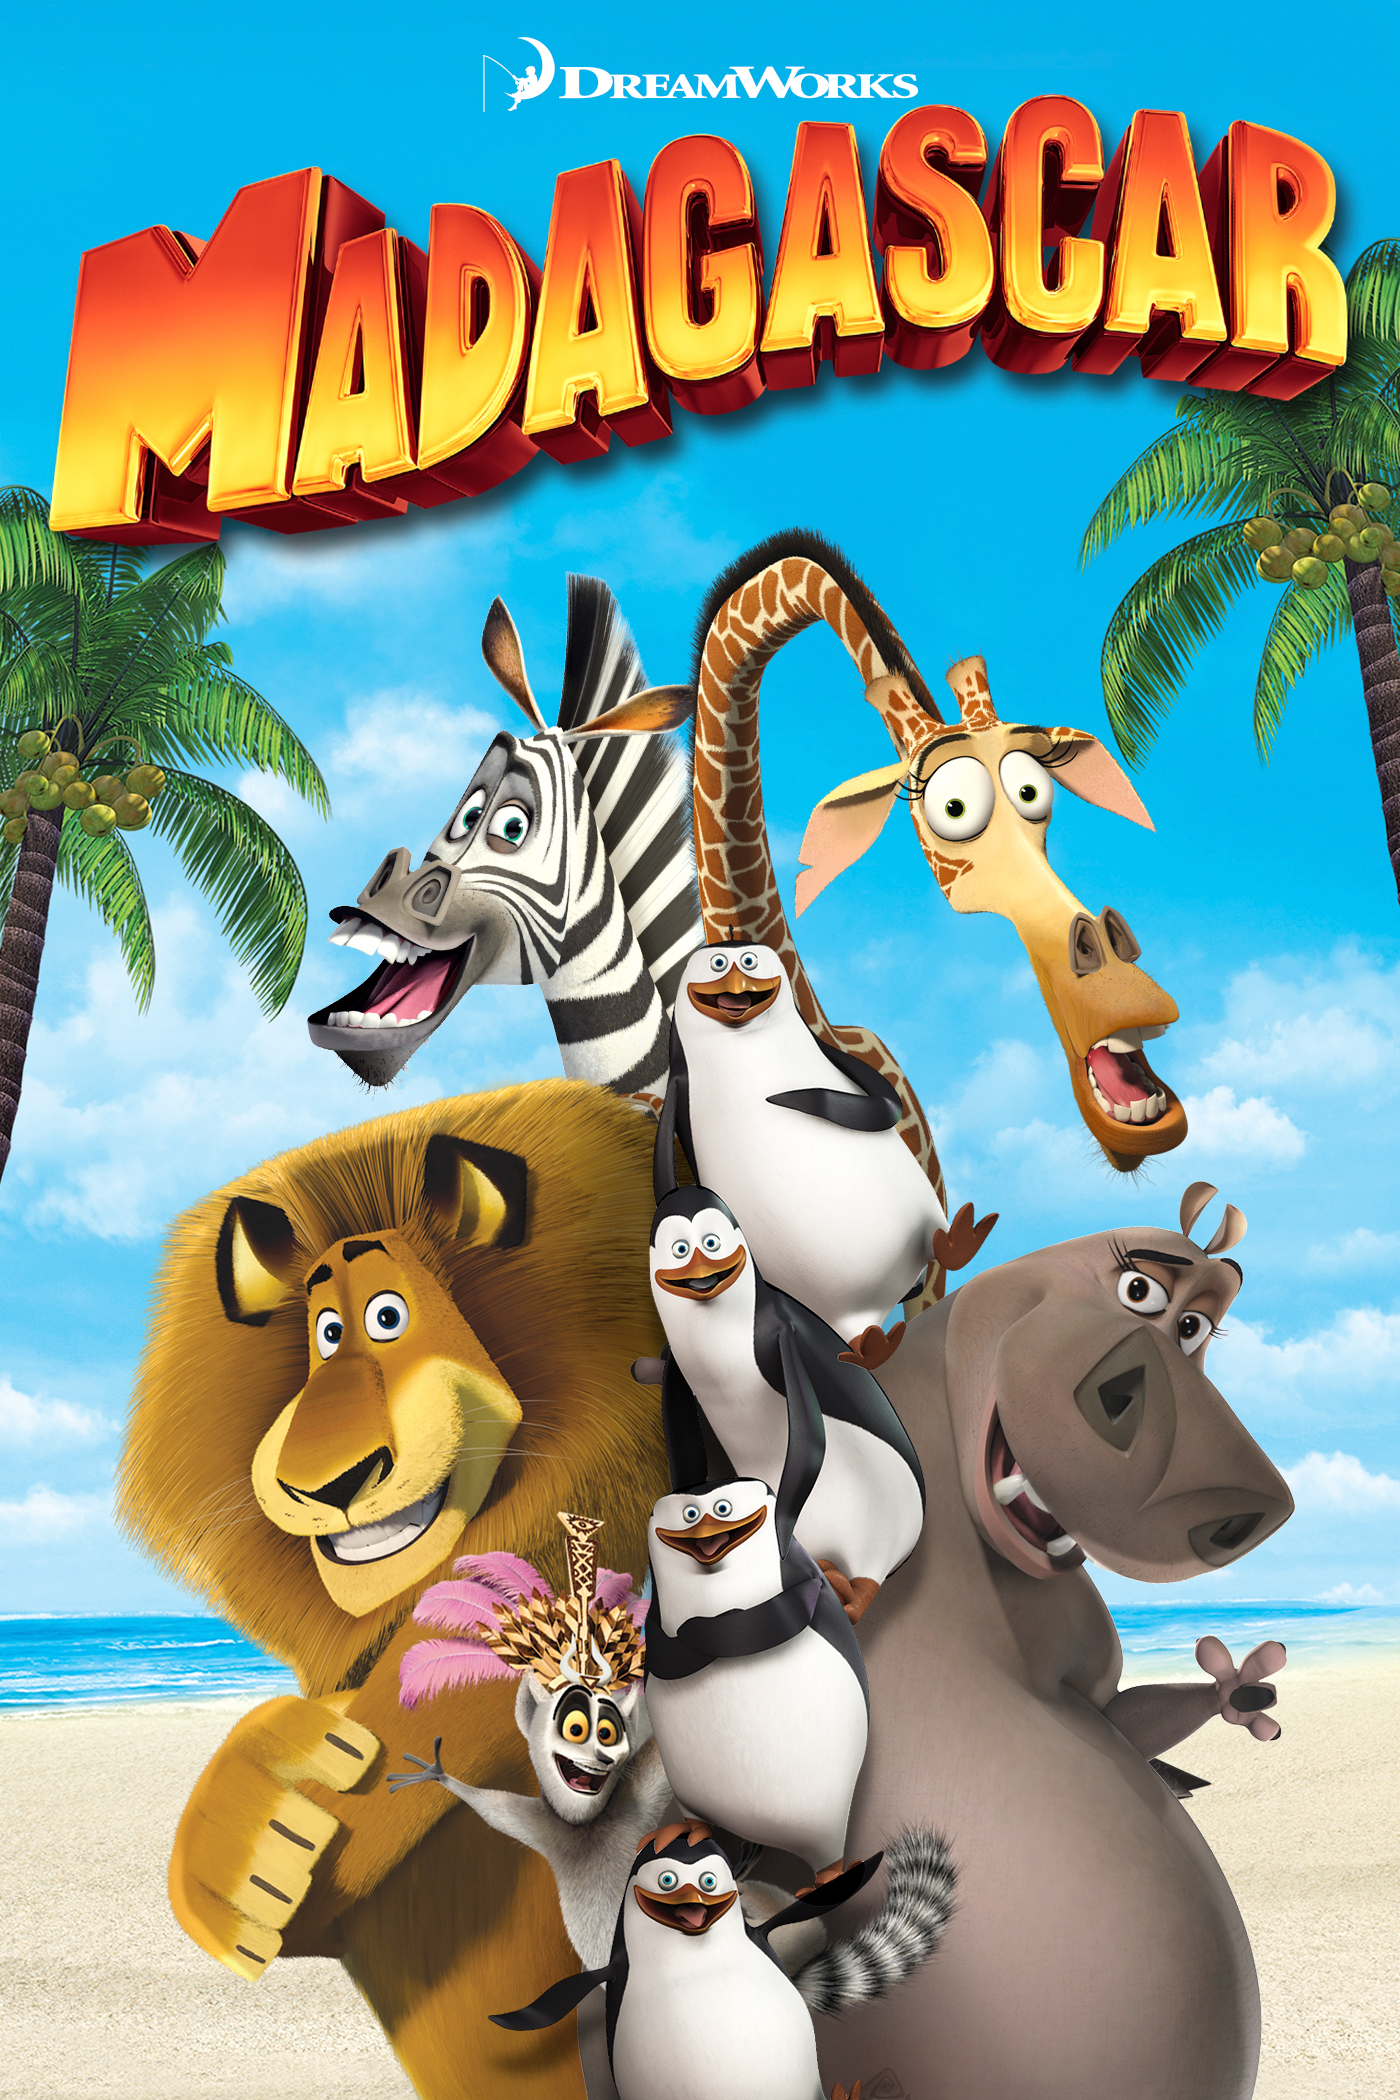 Madagascar Home Video | Dreamworks Animation Wiki | Fandom